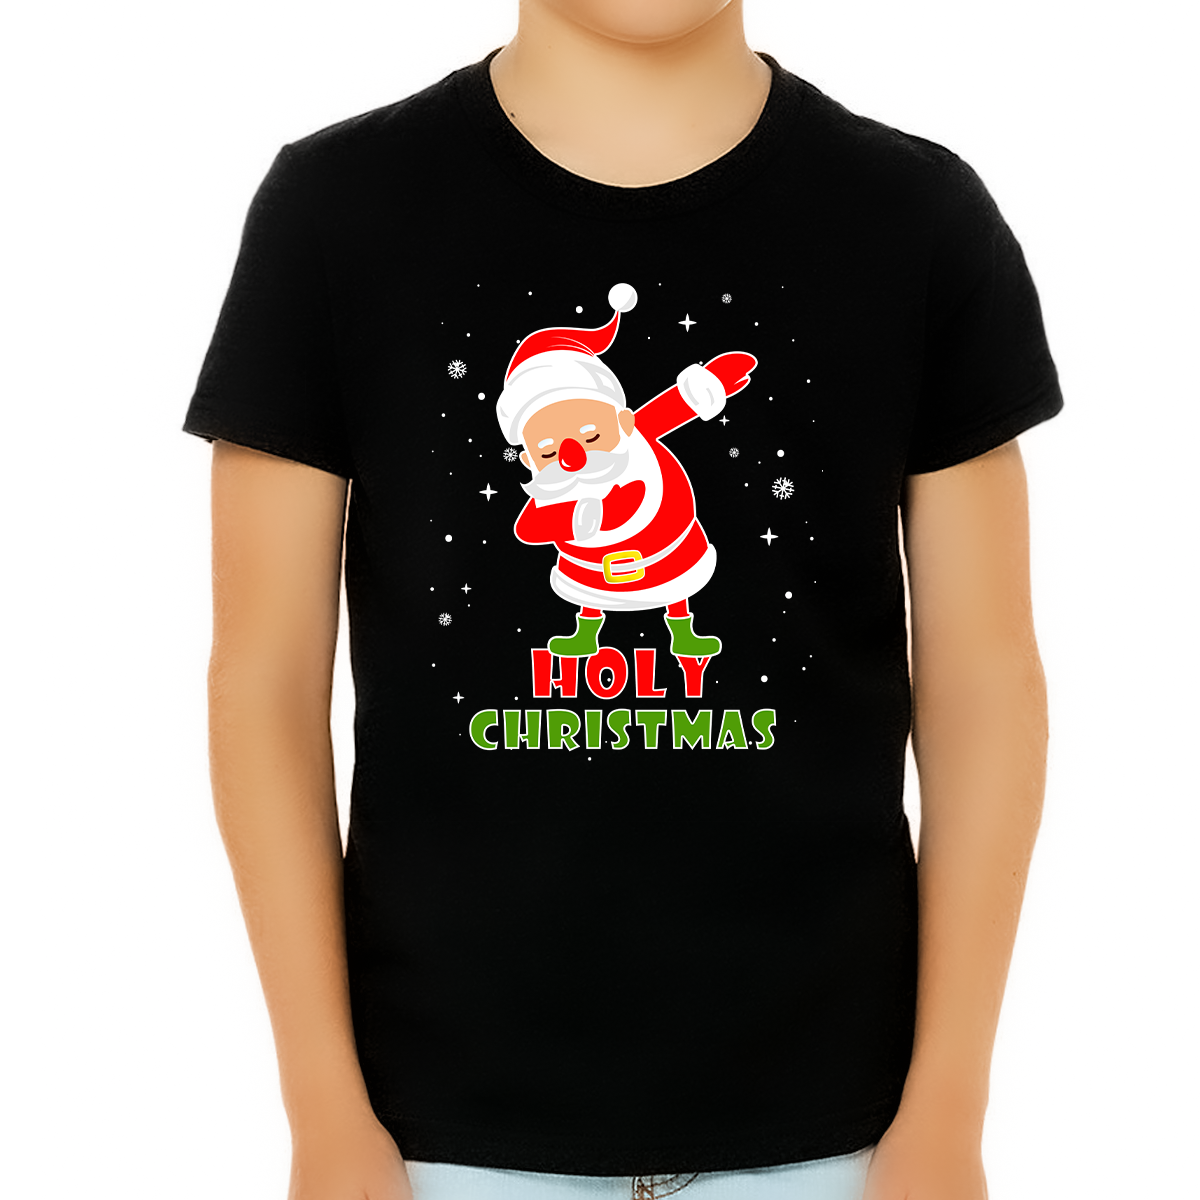 Boys Christmas Shirt Funny Dabbing Santa Christmas Shirts for Boys Christmas Shirts for Kids